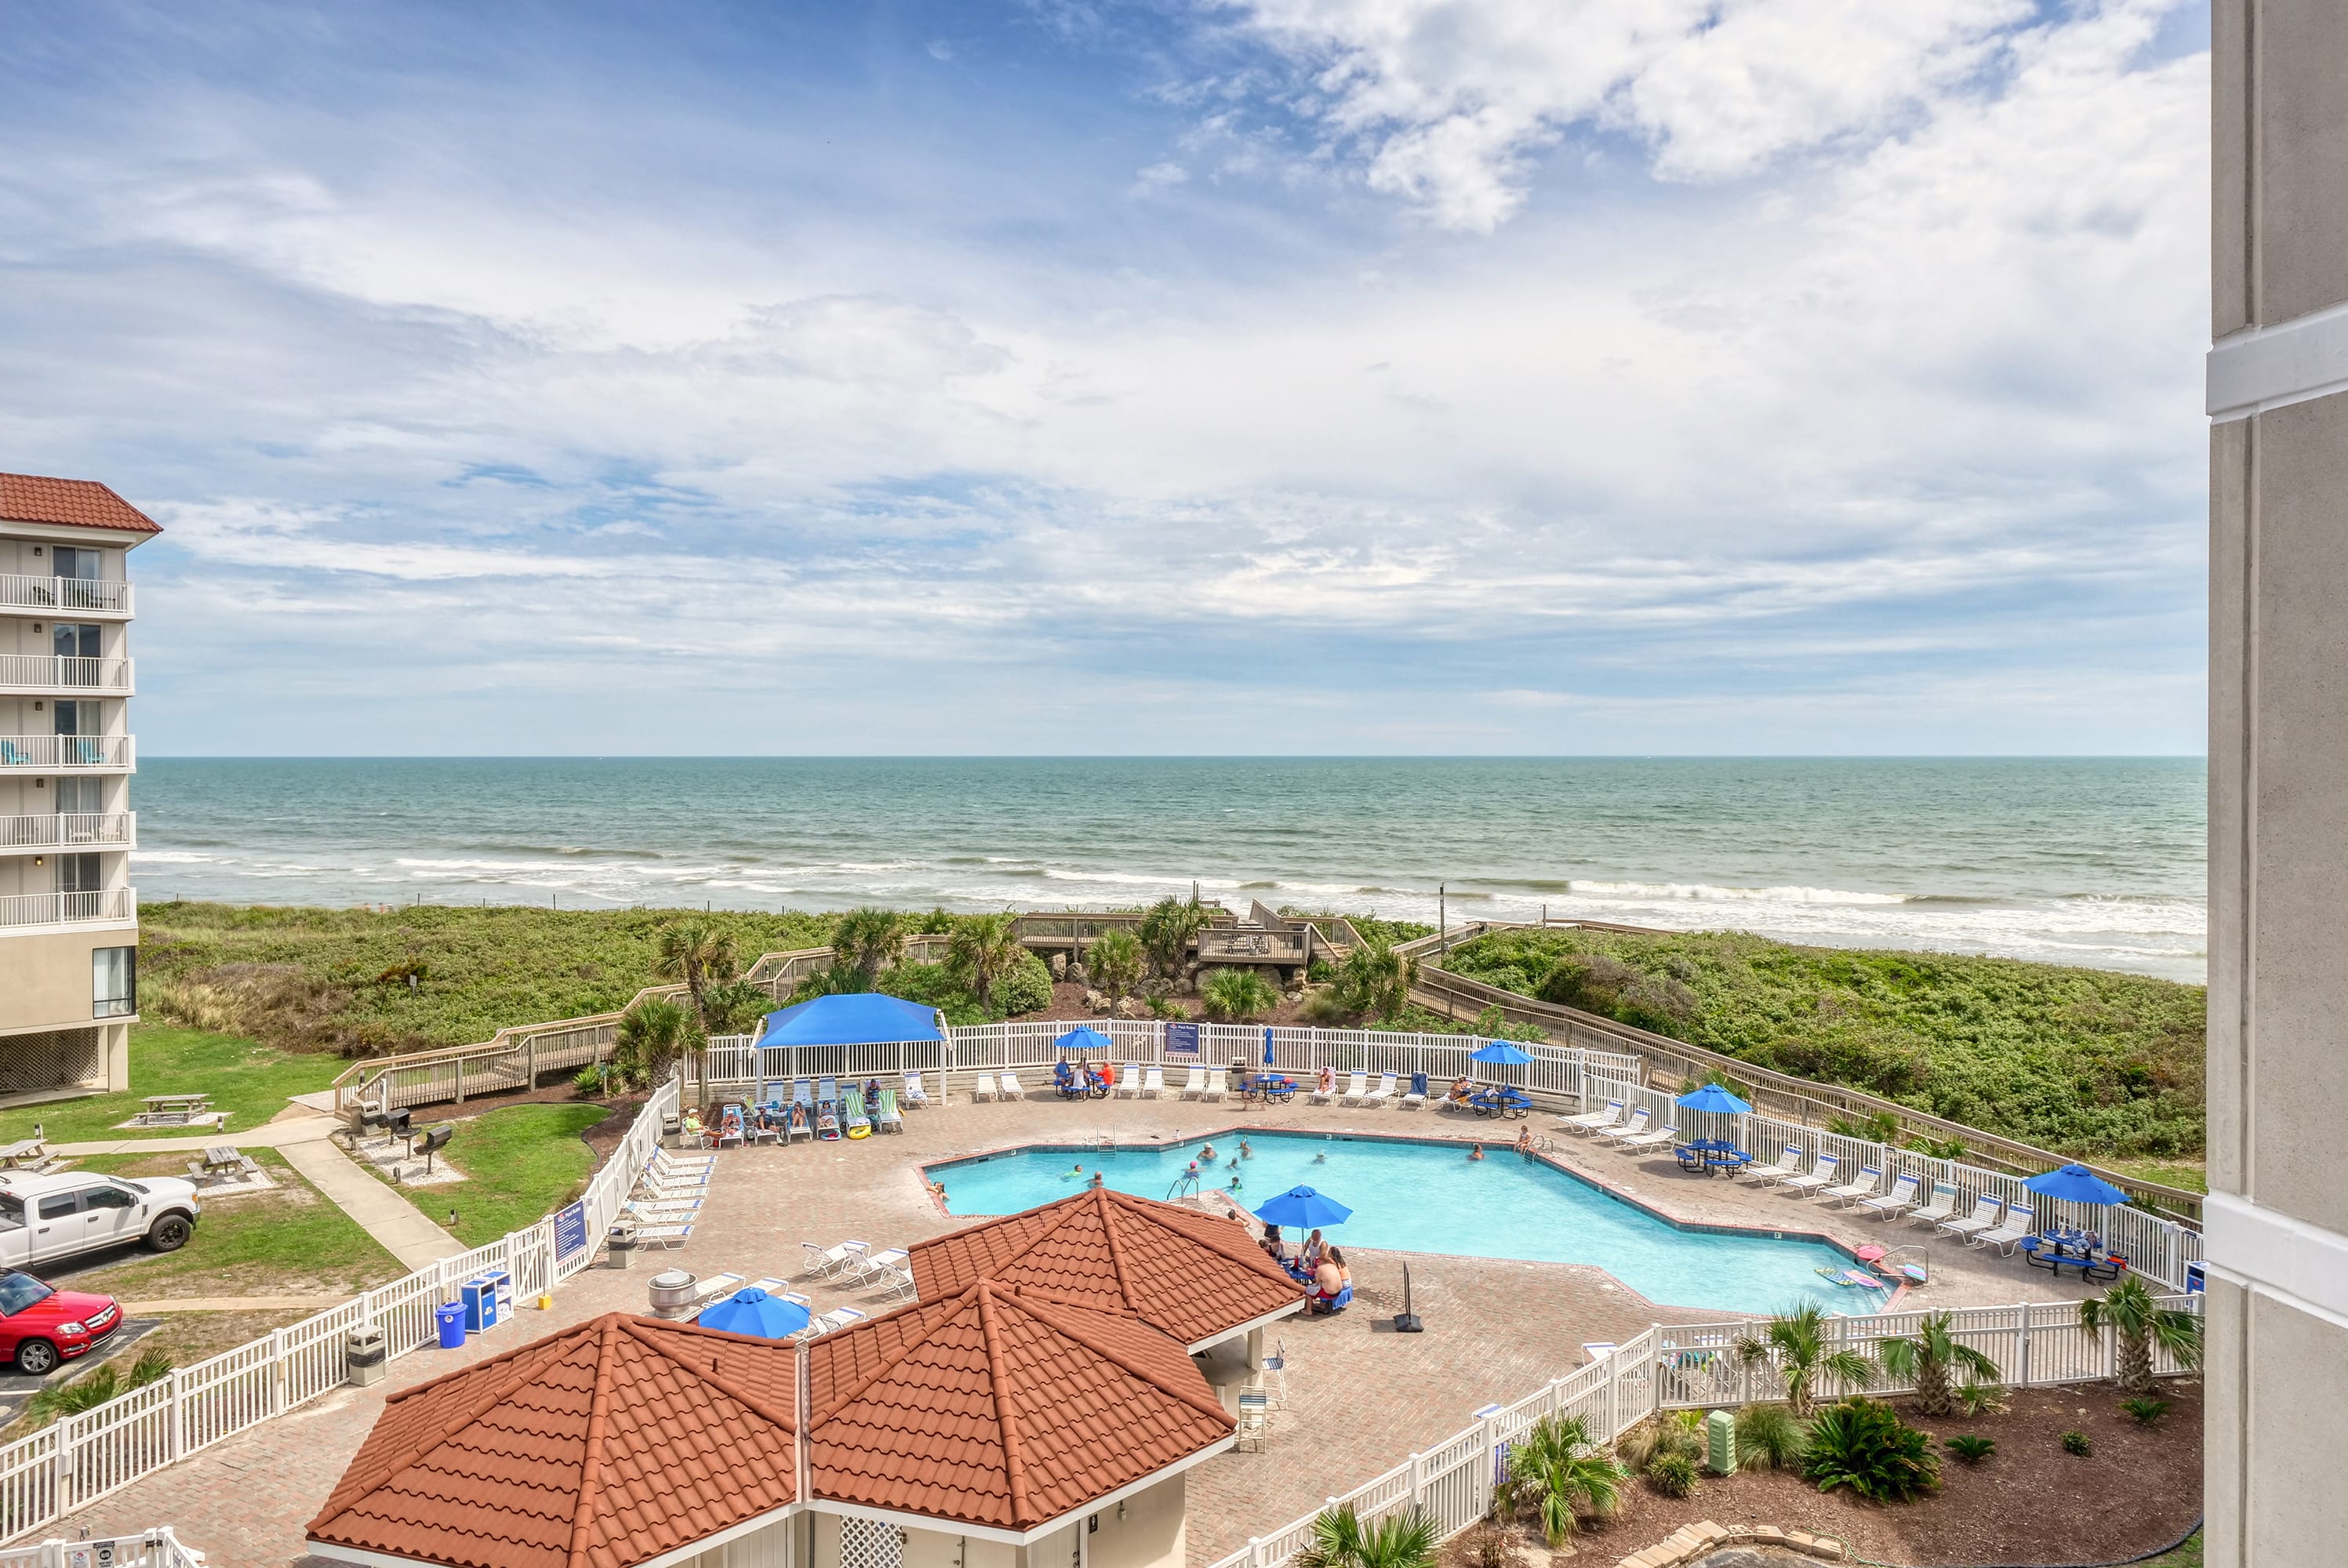 St Regis Beachfront Resort with Pool 2BR Condo Sleeps 5